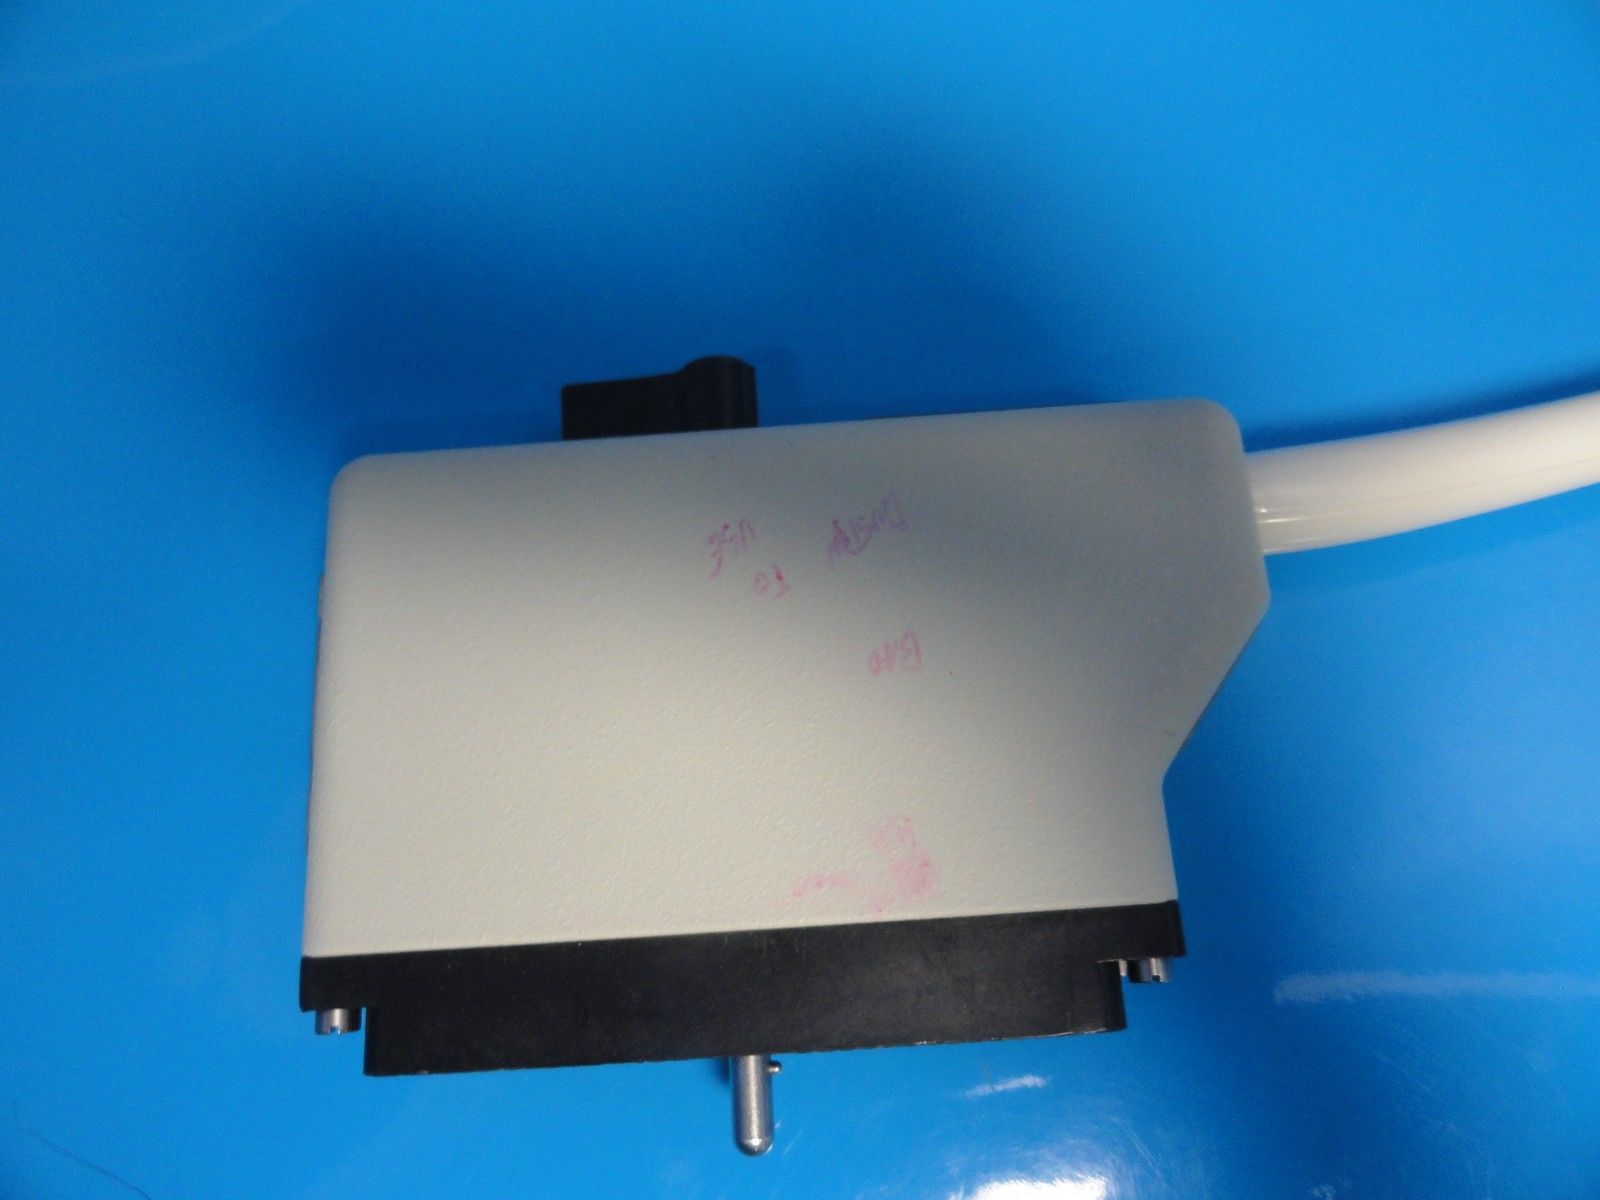 GE Diasonics 10MI (10 MI) P/N 100-02270-01 Linear Array Transducer Probe (10408) DIAGNOSTIC ULTRASOUND MACHINES FOR SALE